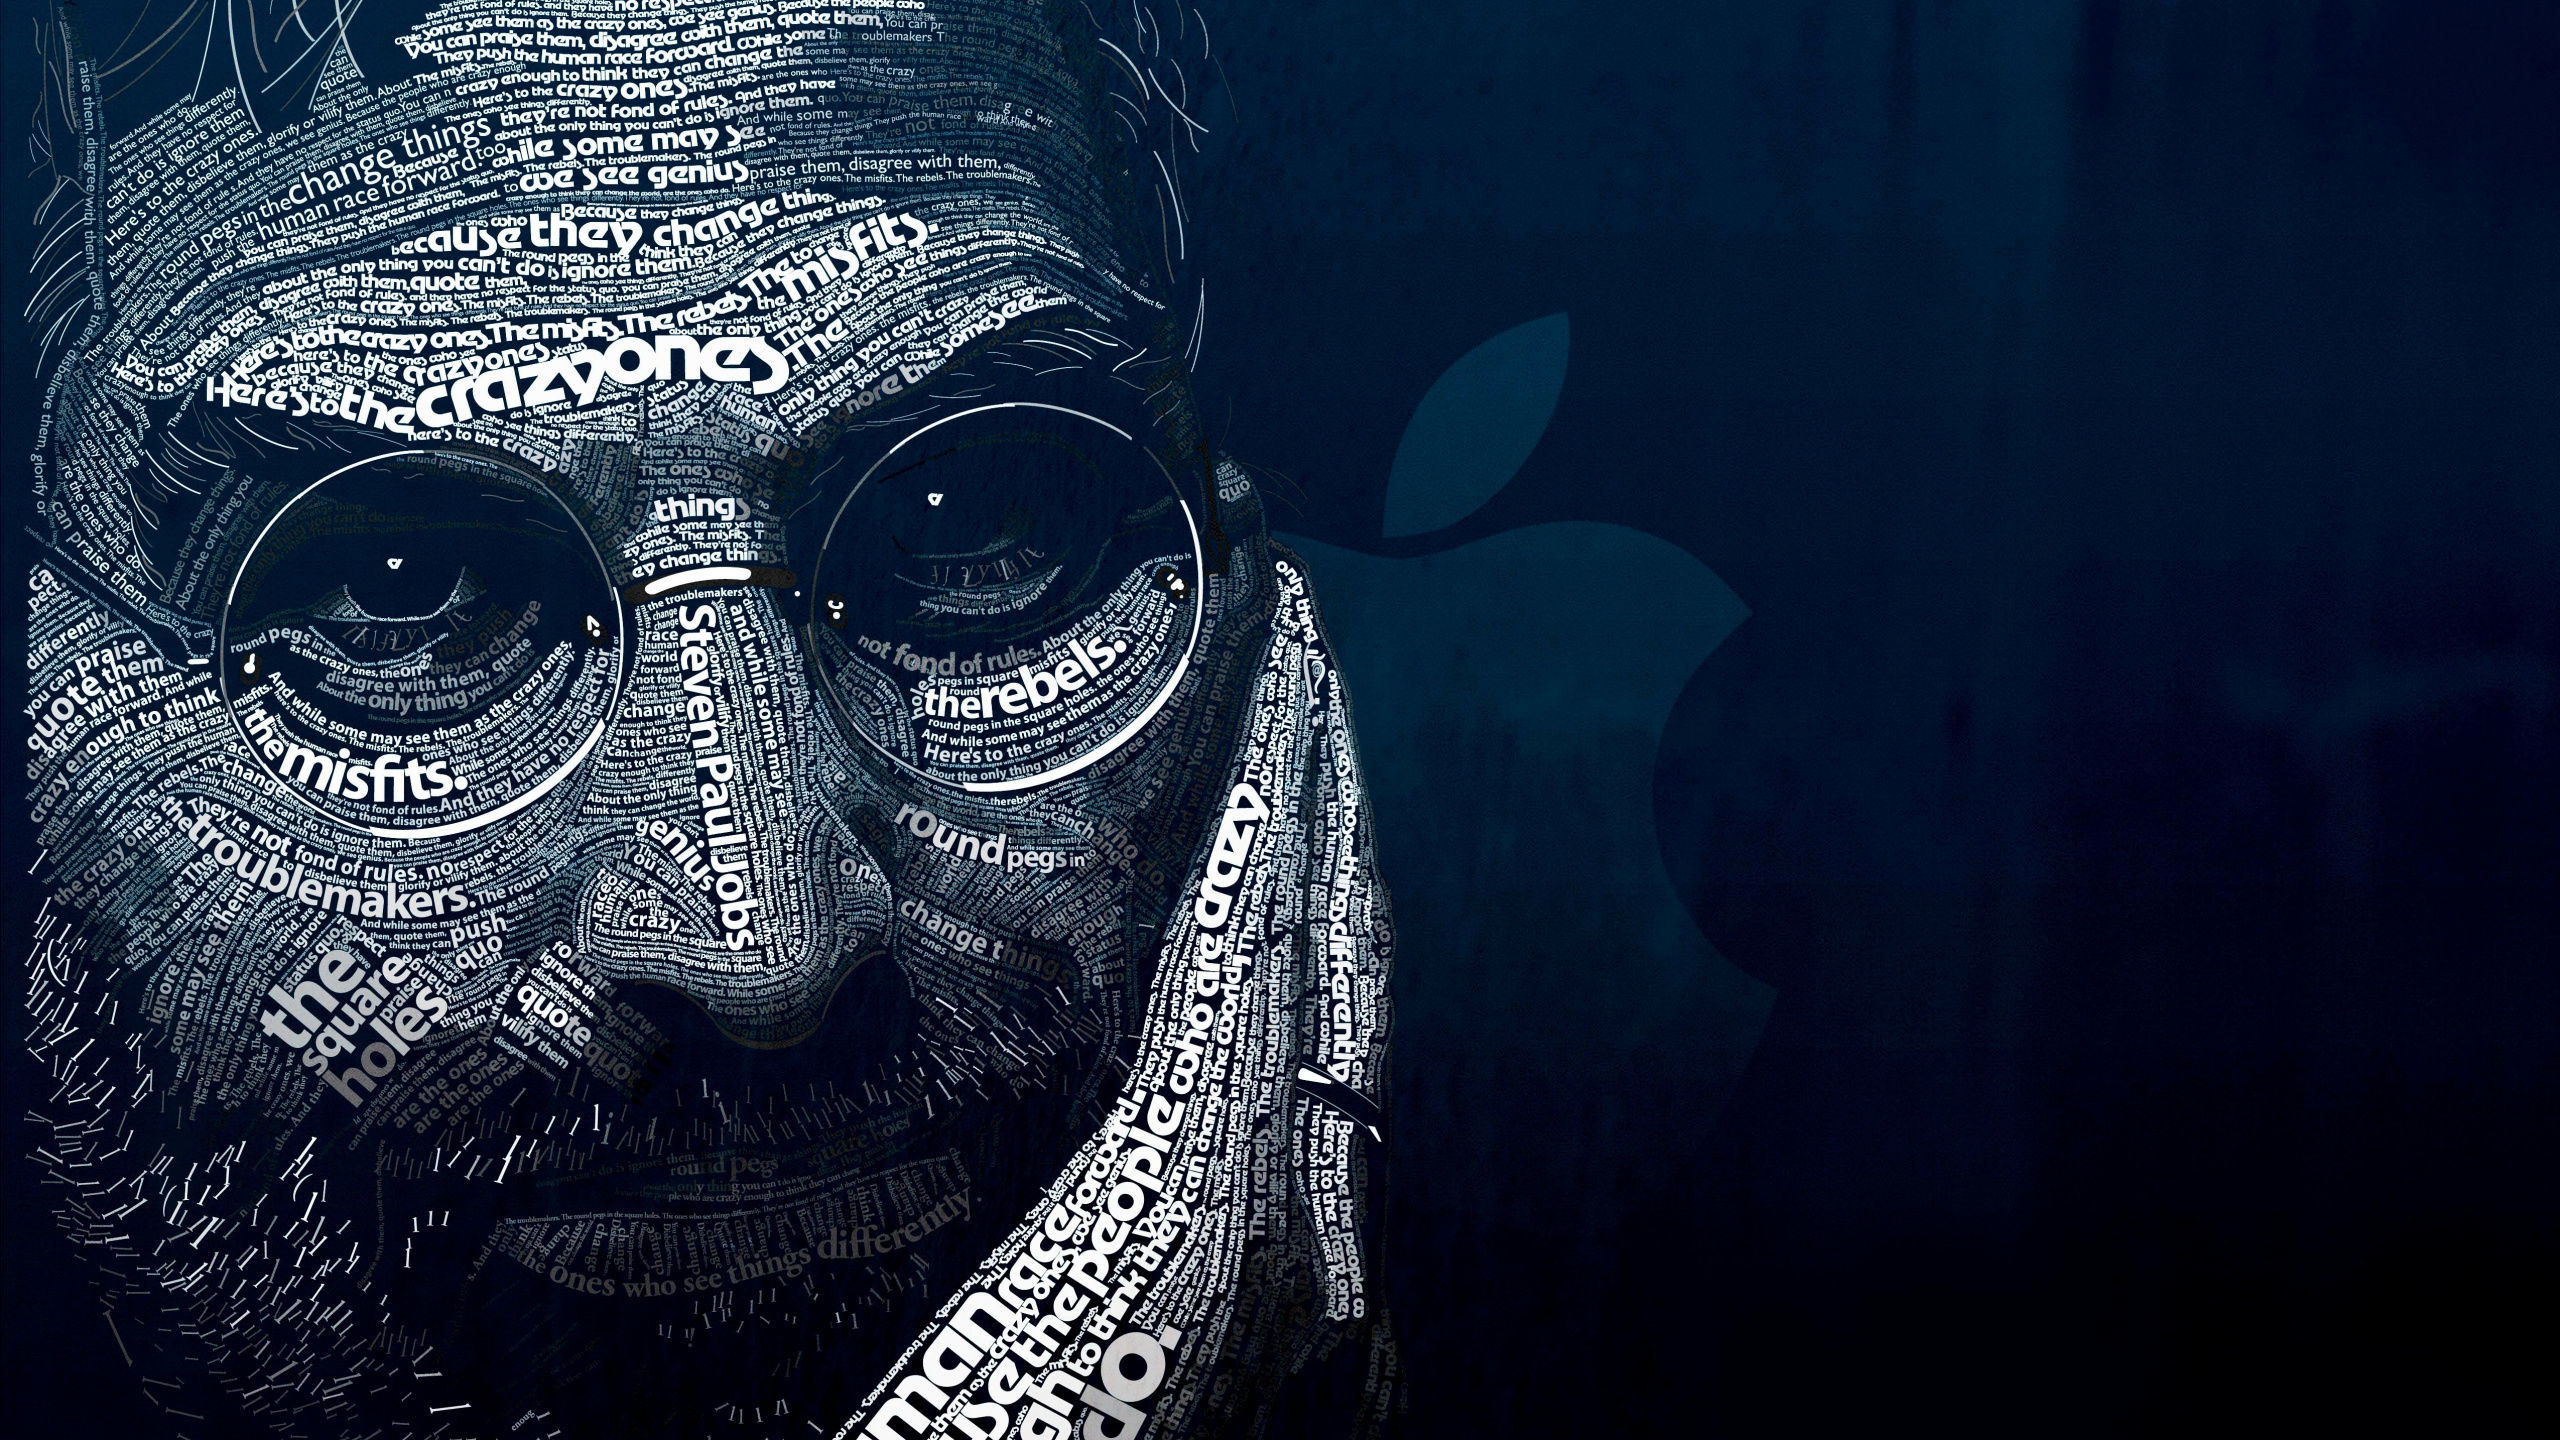 Steve Jobs, Apple, Masque, IPod, Humanos. Wallpaper in 2560x1440 Resolution